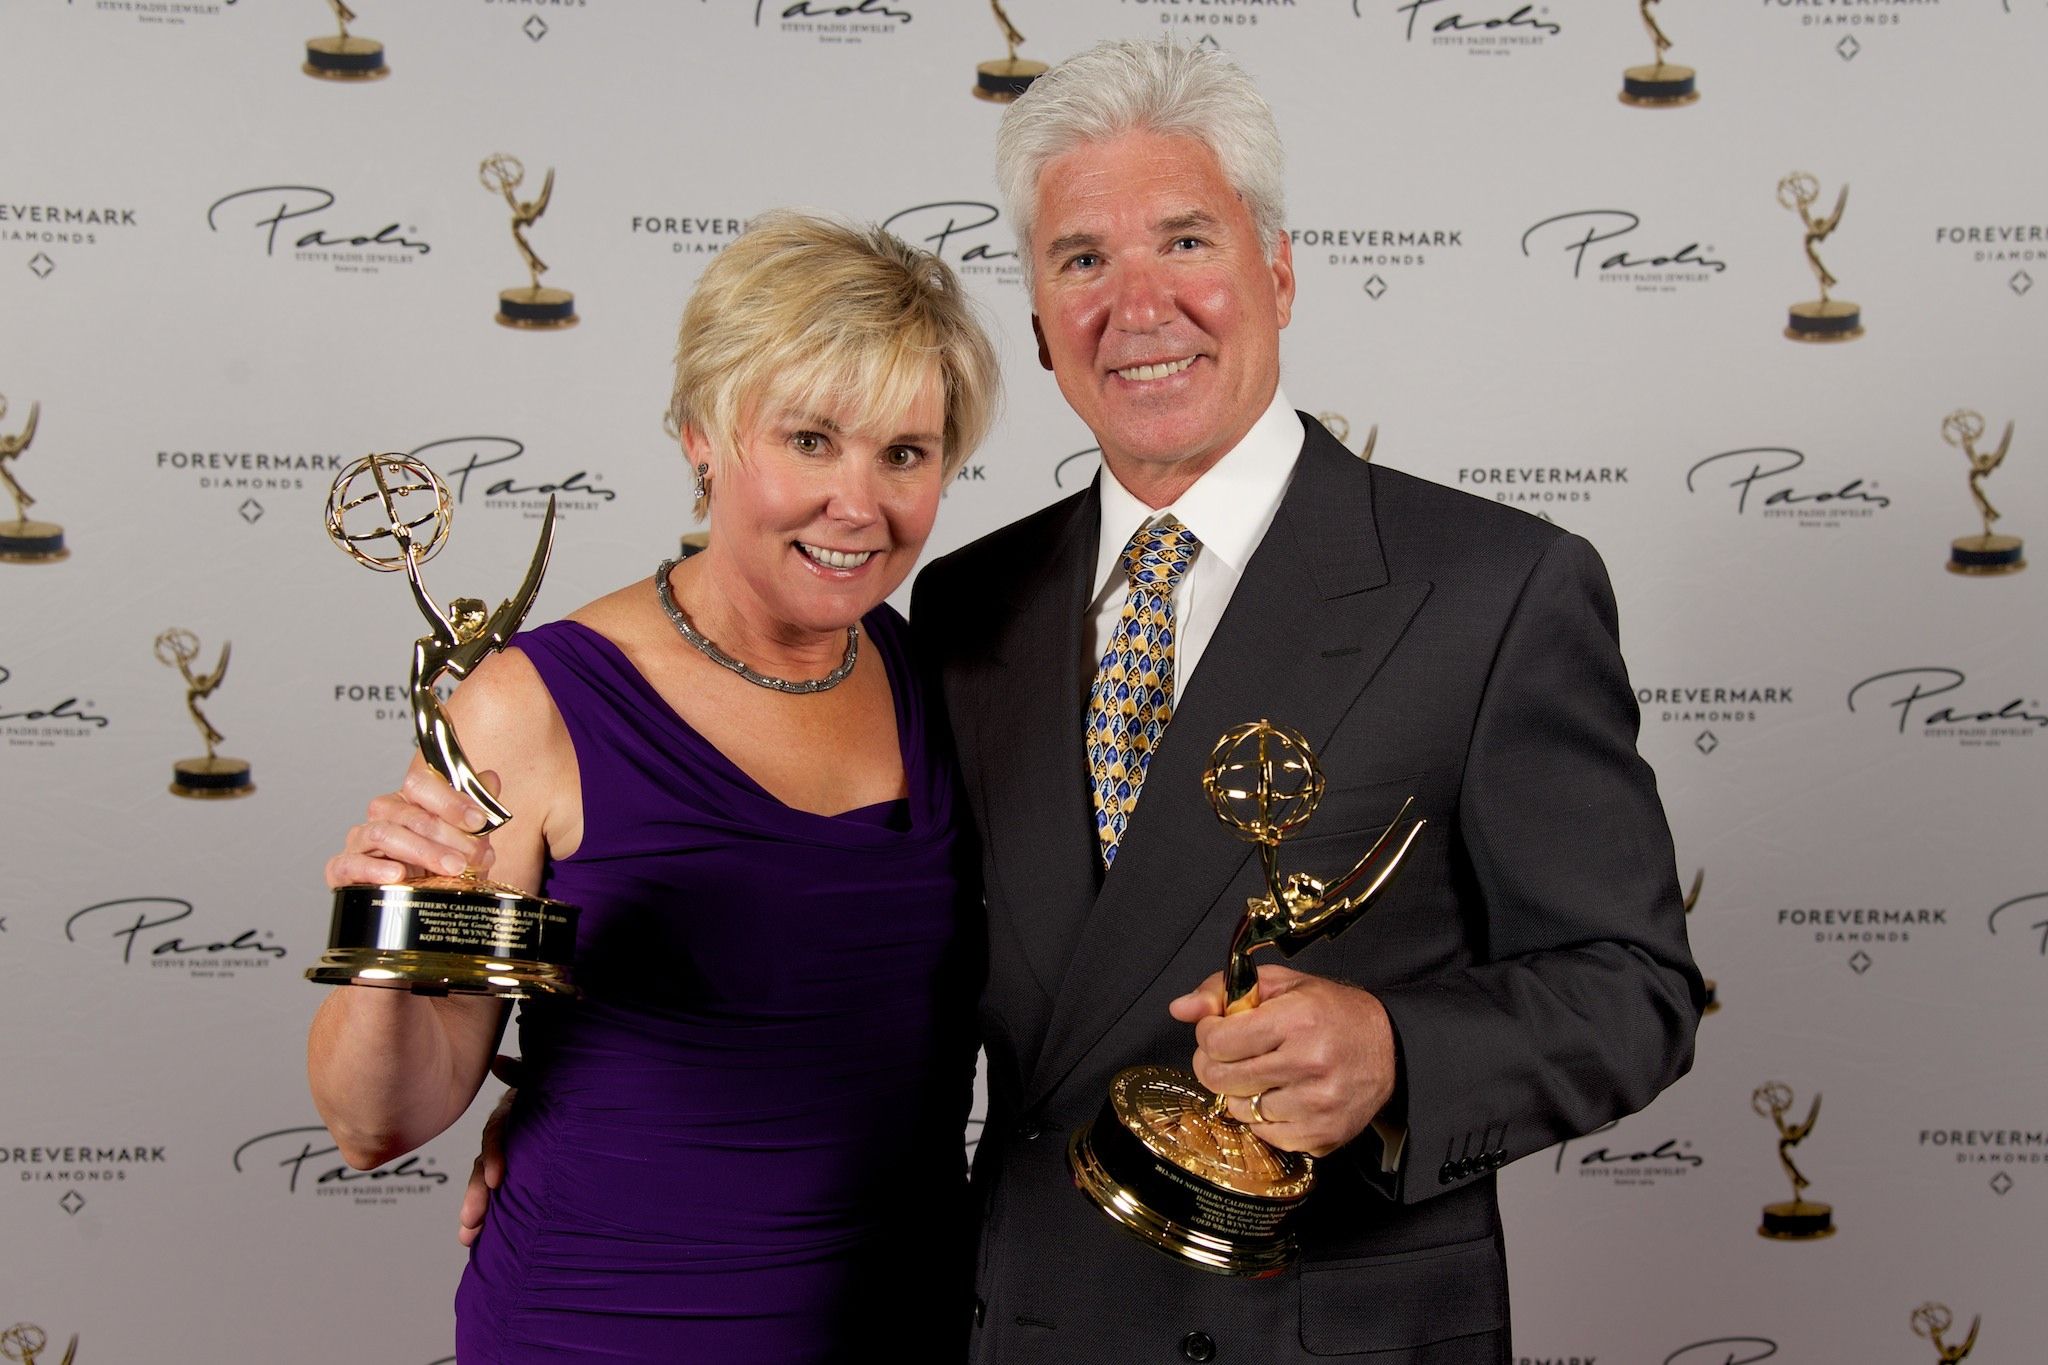 Emmy 2014